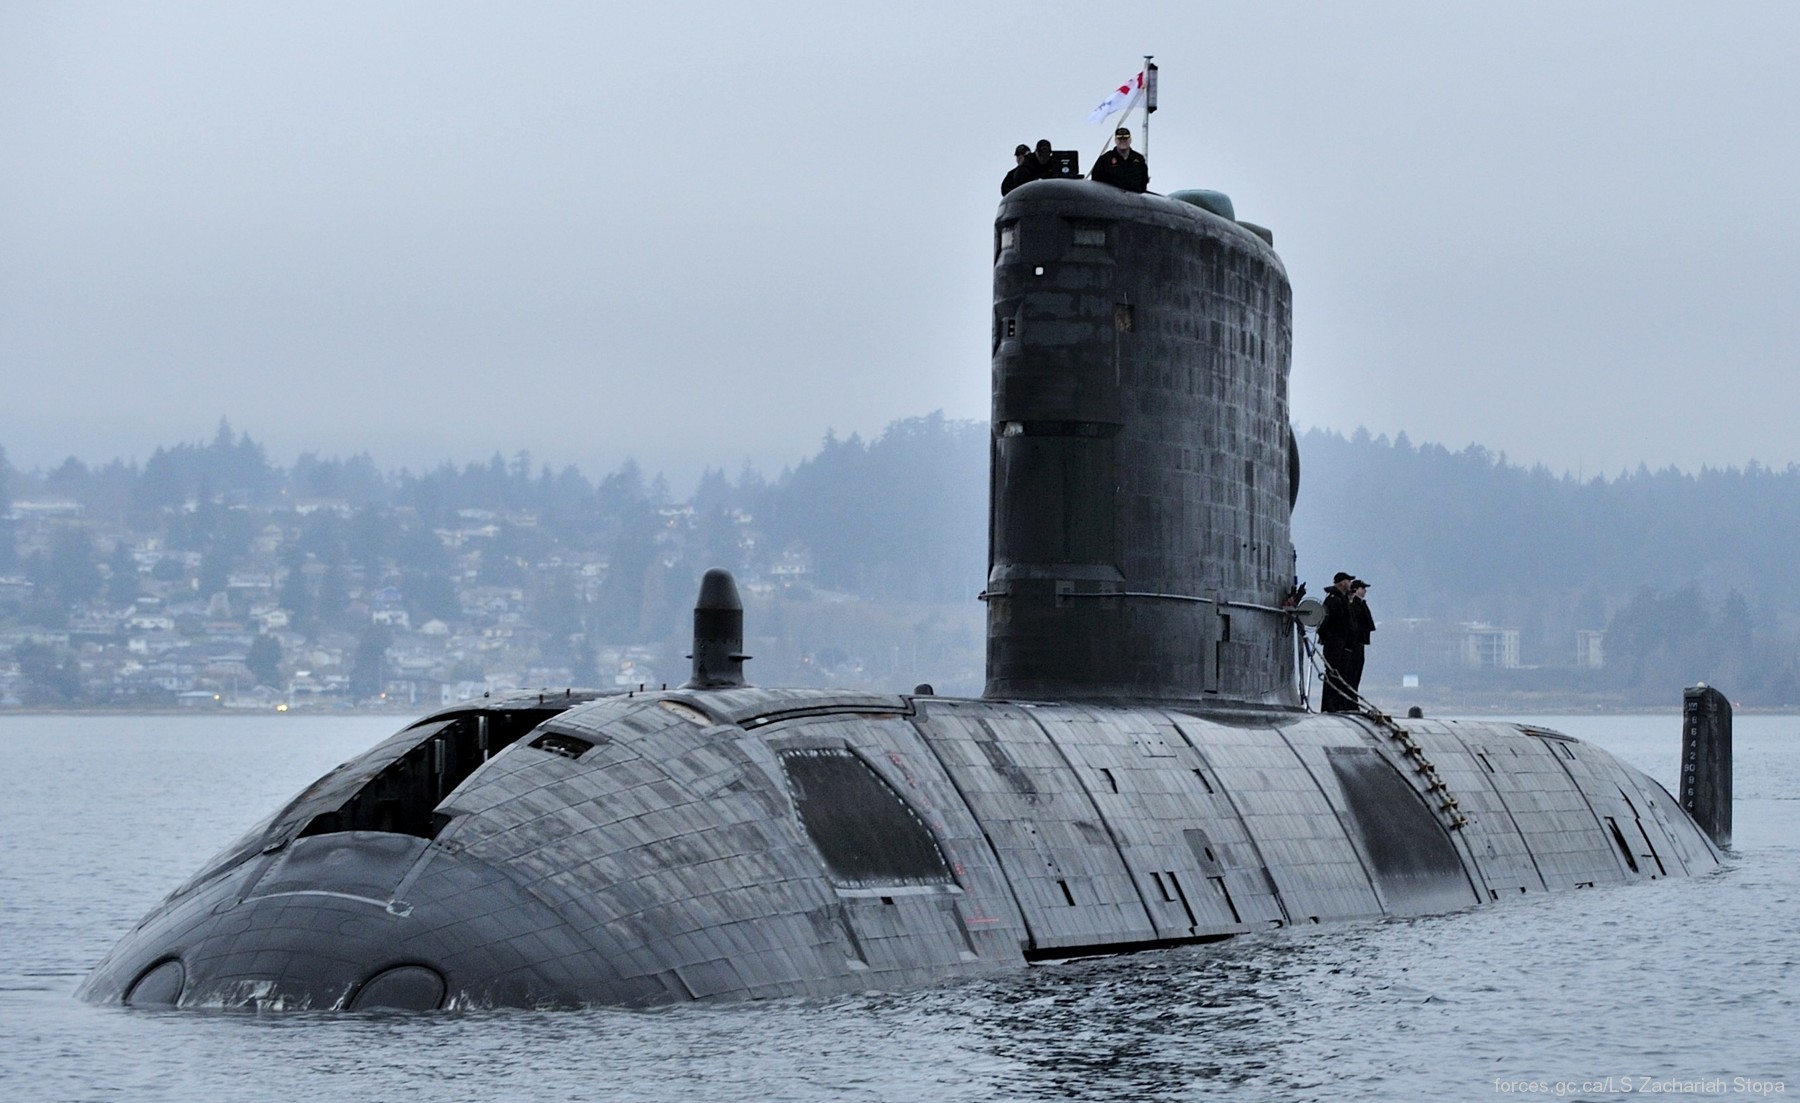 upholder class attack submarine ssk royal navy